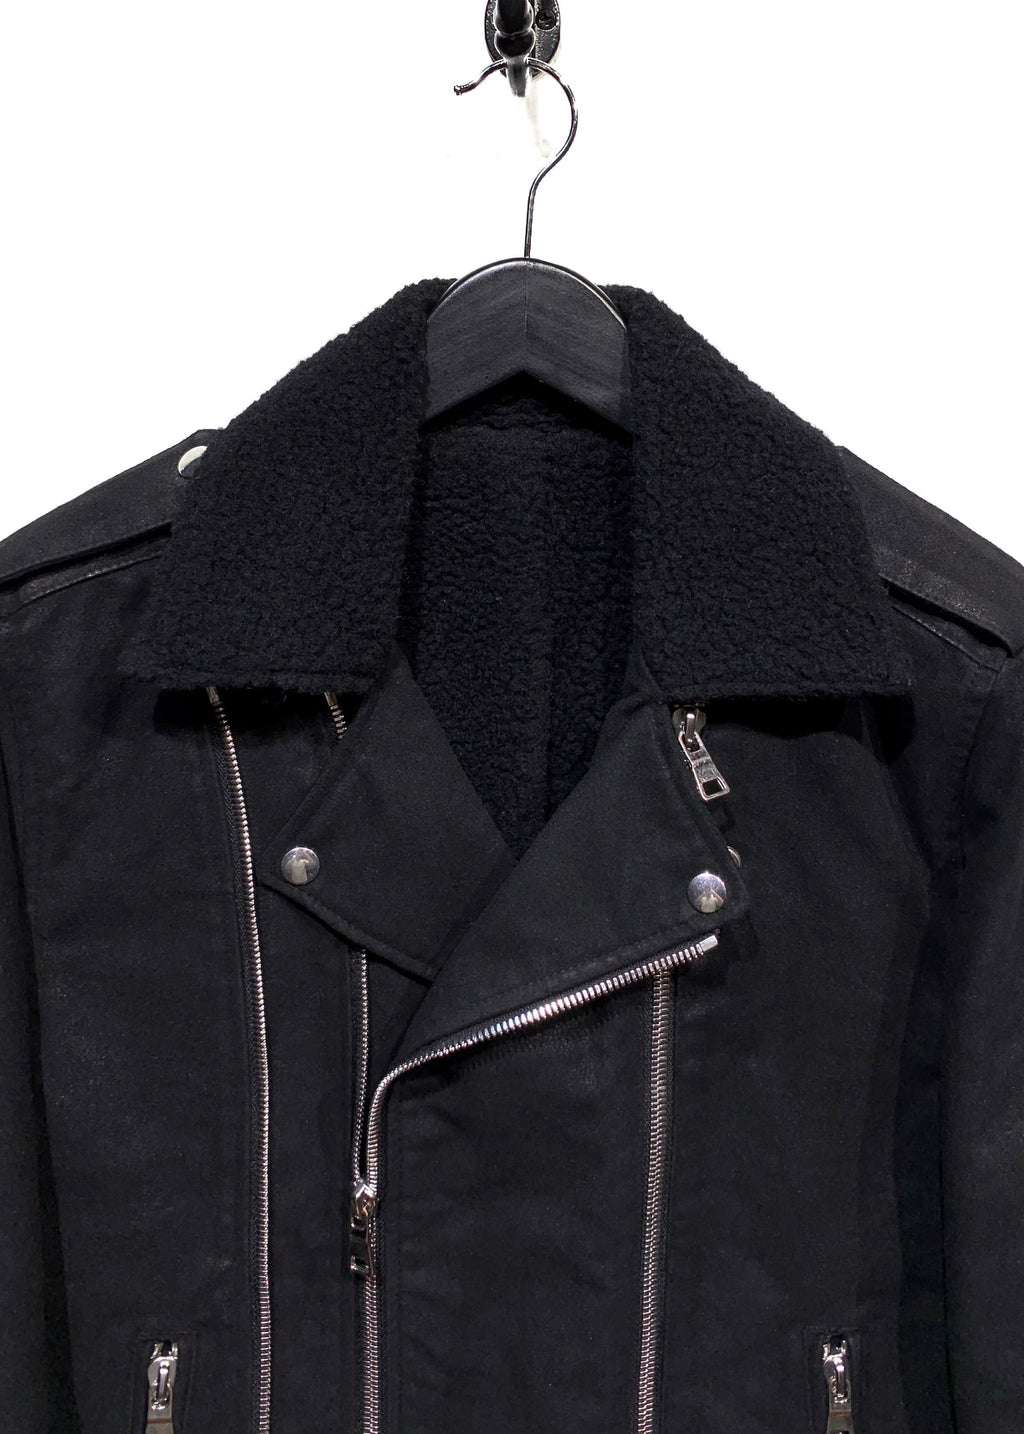 Balmain Black Waxed Cotton and Wool Lined Biker Jacket